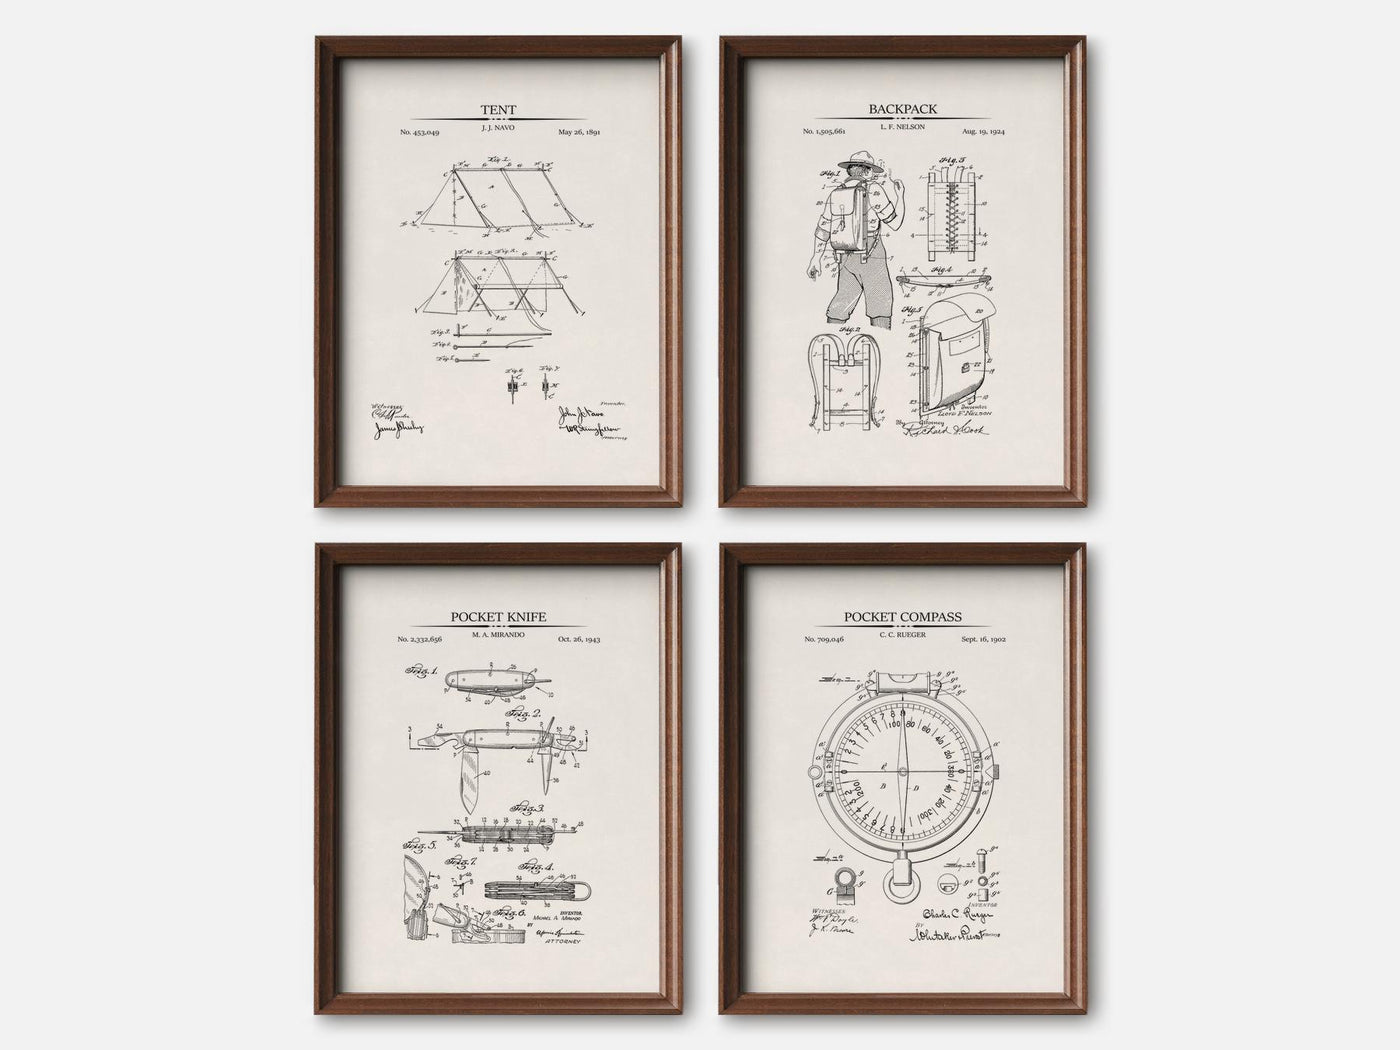 Camping Patent Print Set of 3 mockup - A_t10017-V1-PC_F+WA-SS_4-PS_5x7-C_ivo variant